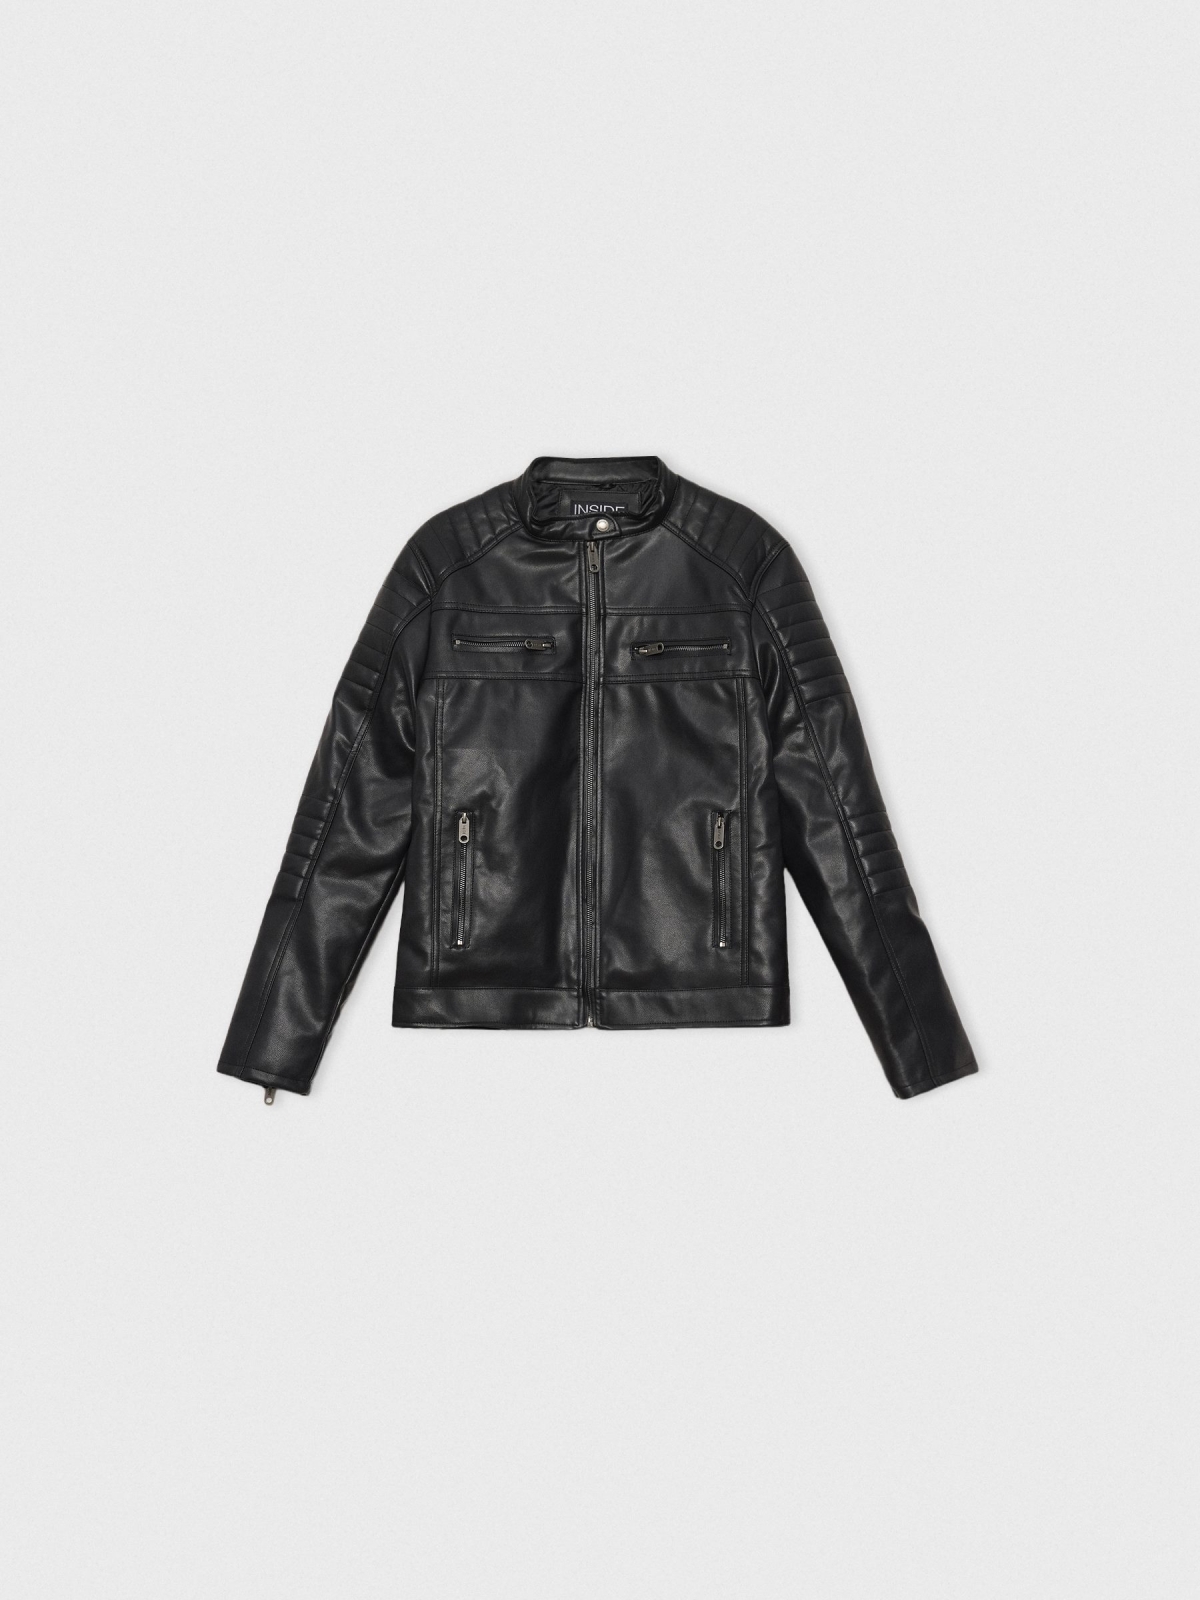  Black leather effect jacket black